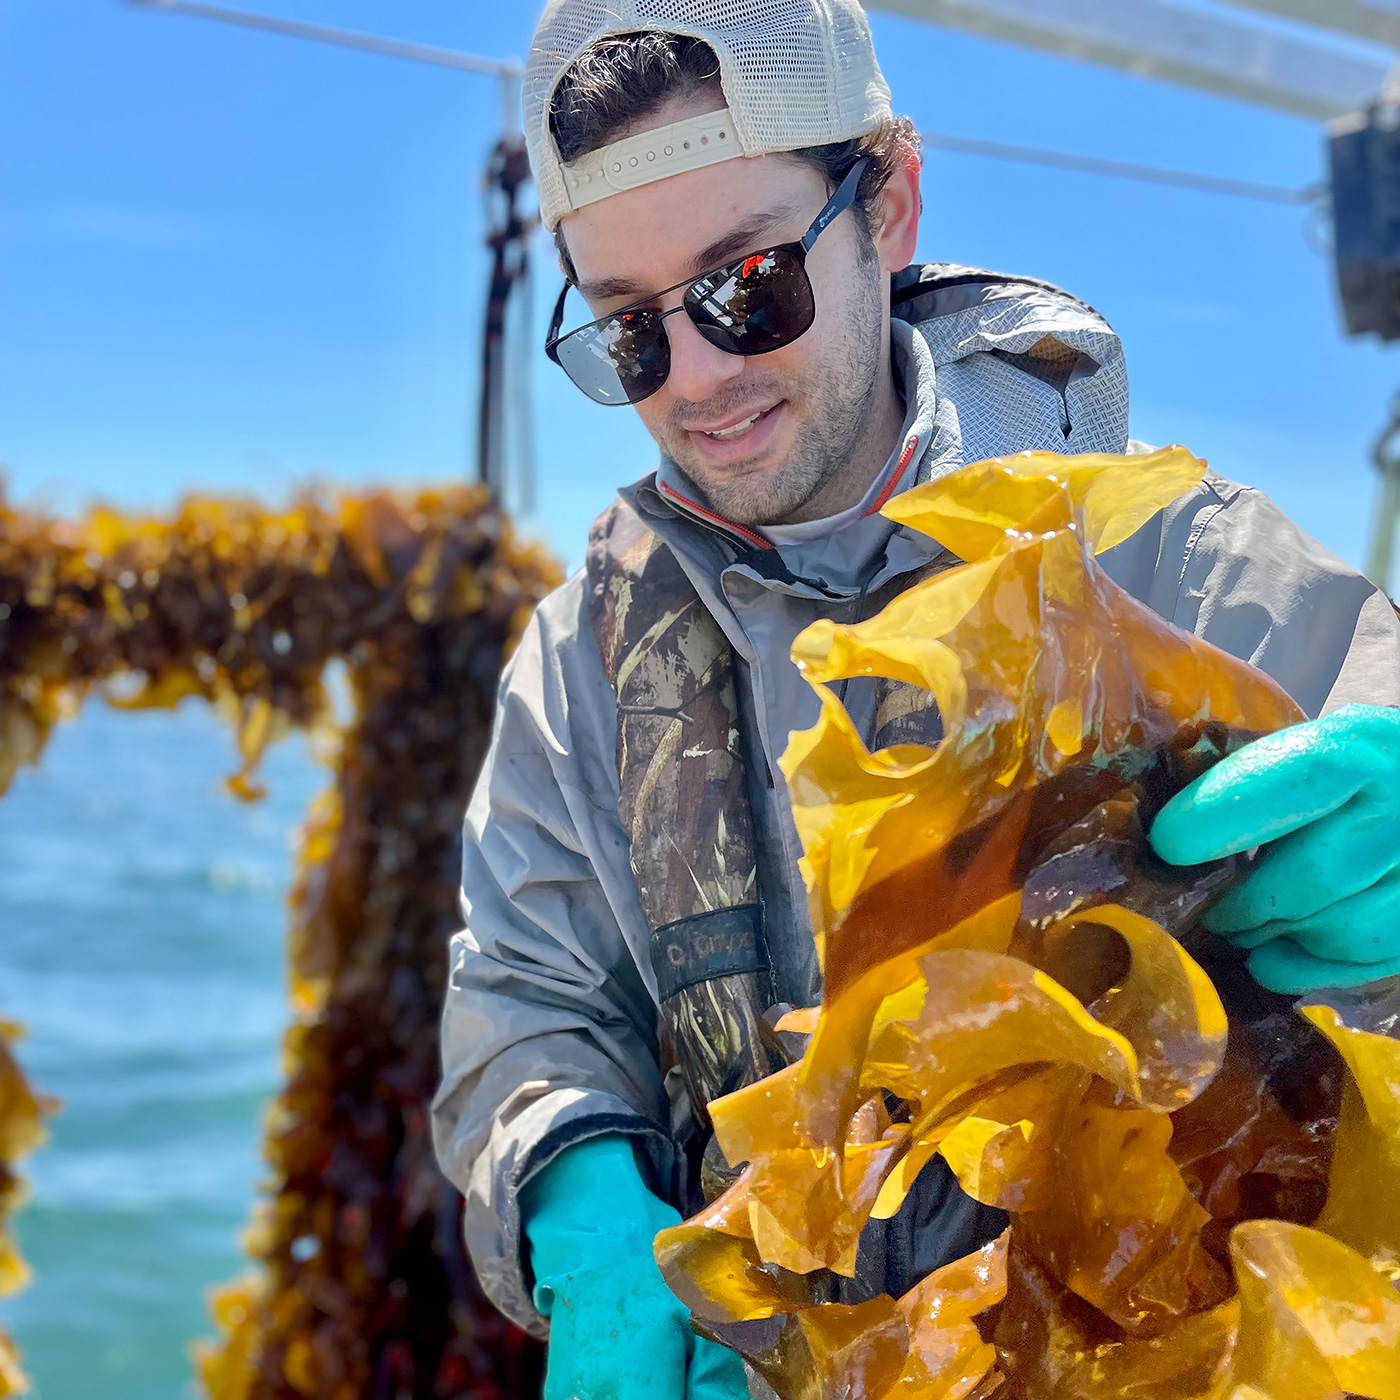 Patrick holding kelp on a boat